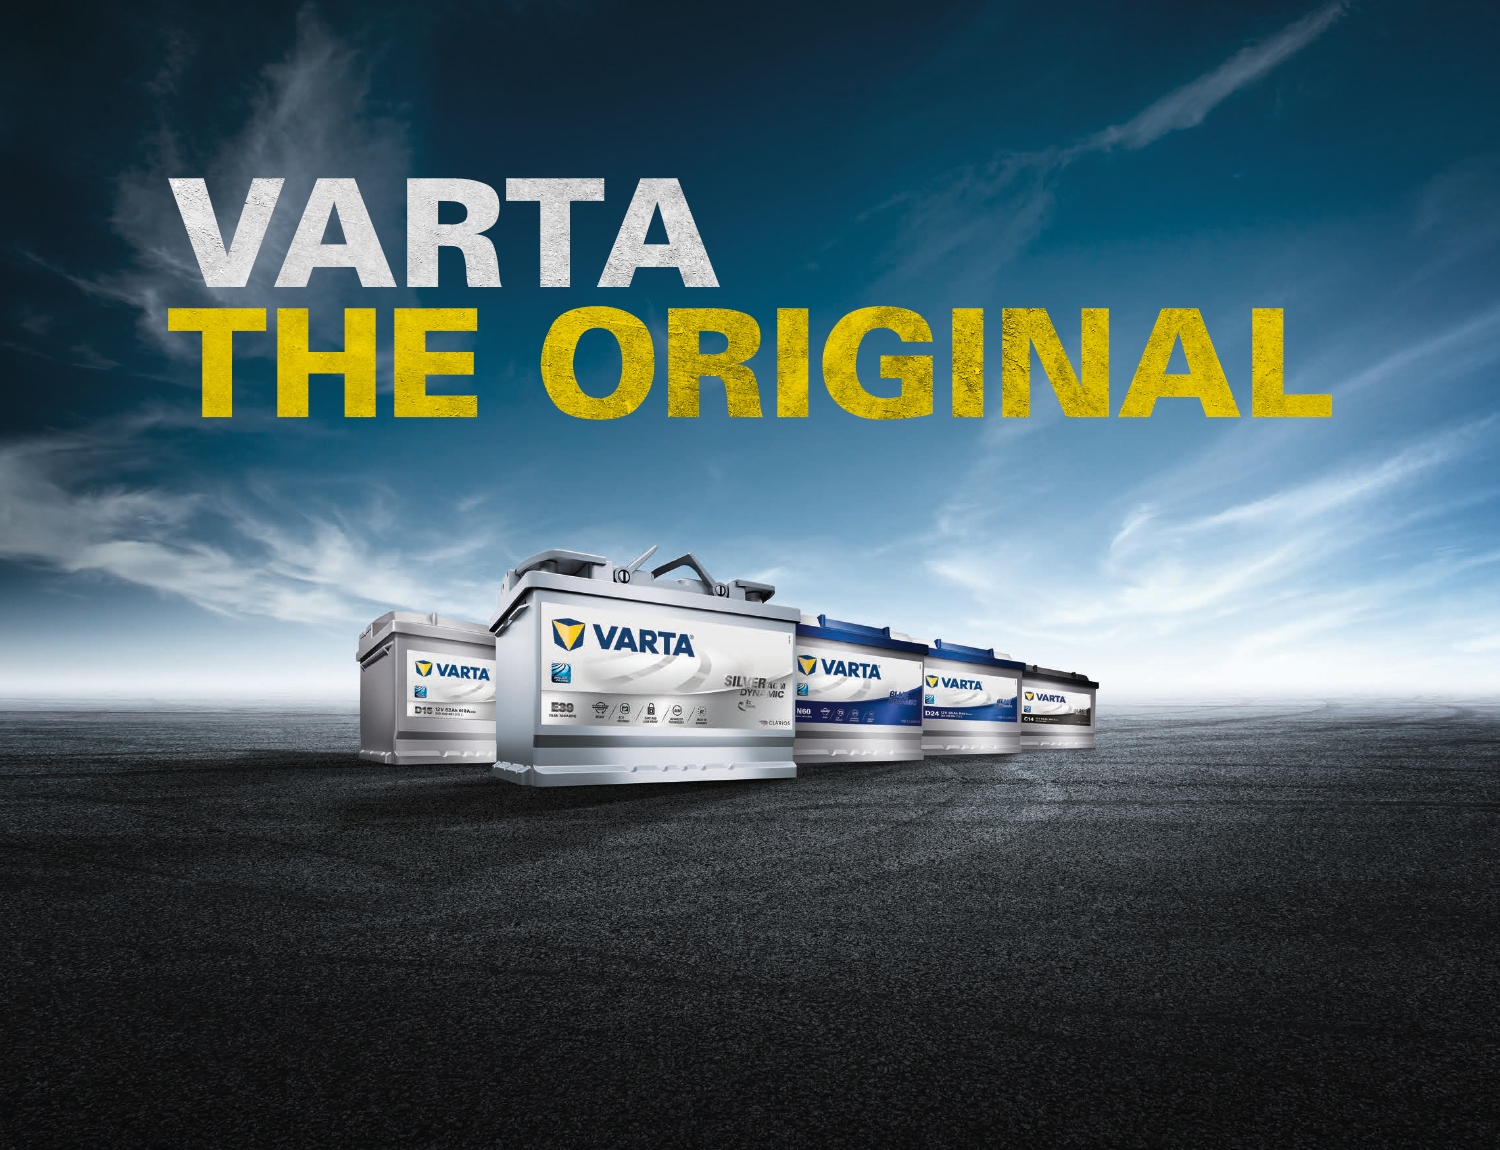 BATTERIE VARTA START STOP EFB D54 12V 65AH 650A - Batteries Auto, Voitures,  4x4, Véhicules Start & Stop Auto - BatterySet